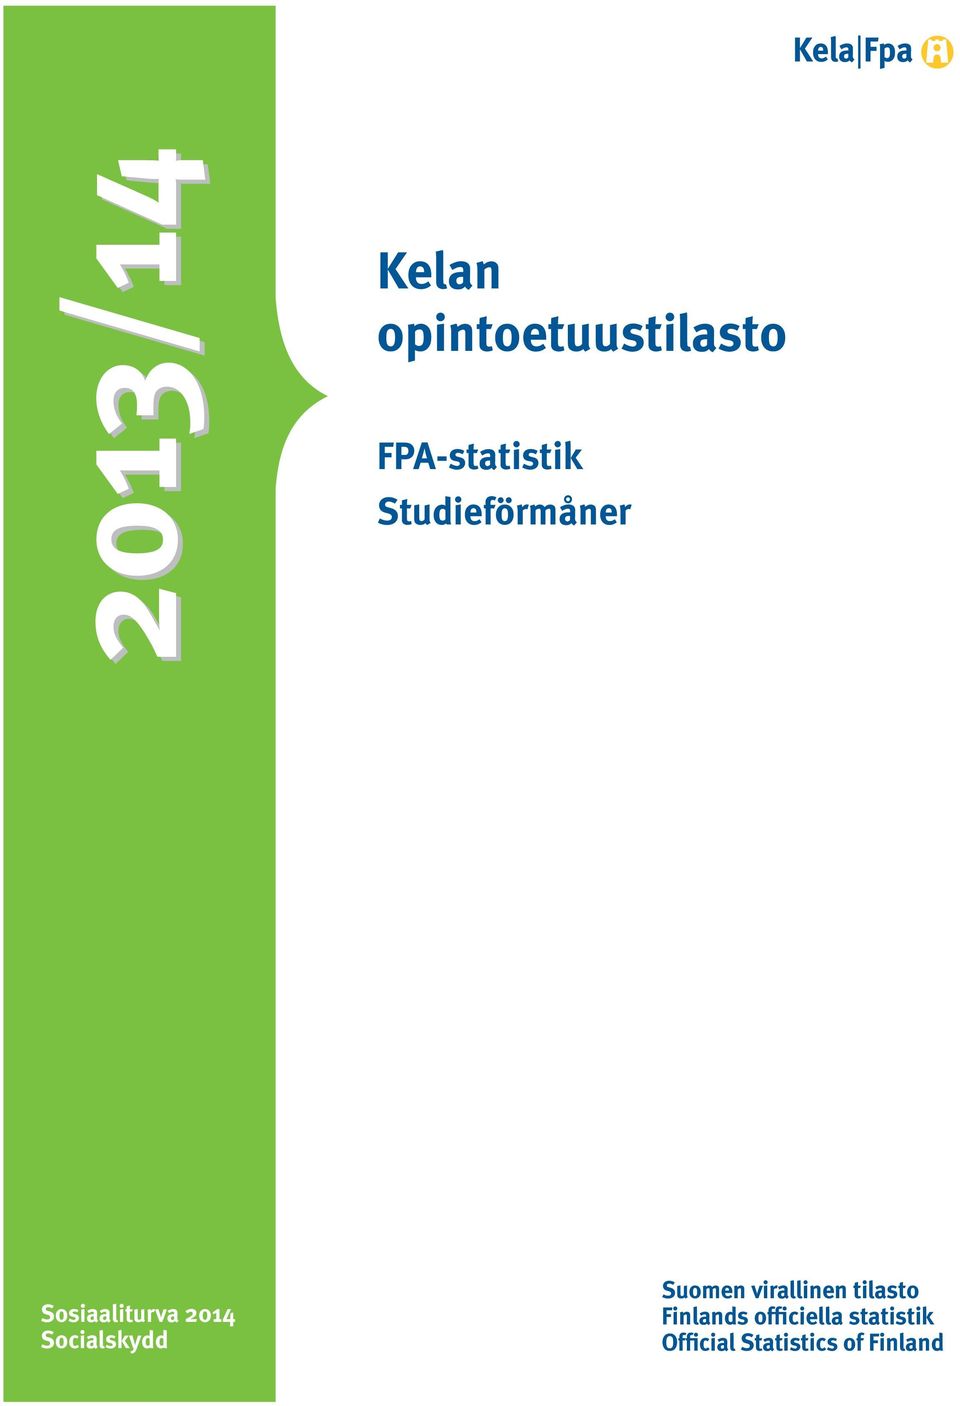 2014 Socialskydd Suomen virallinen tilasto